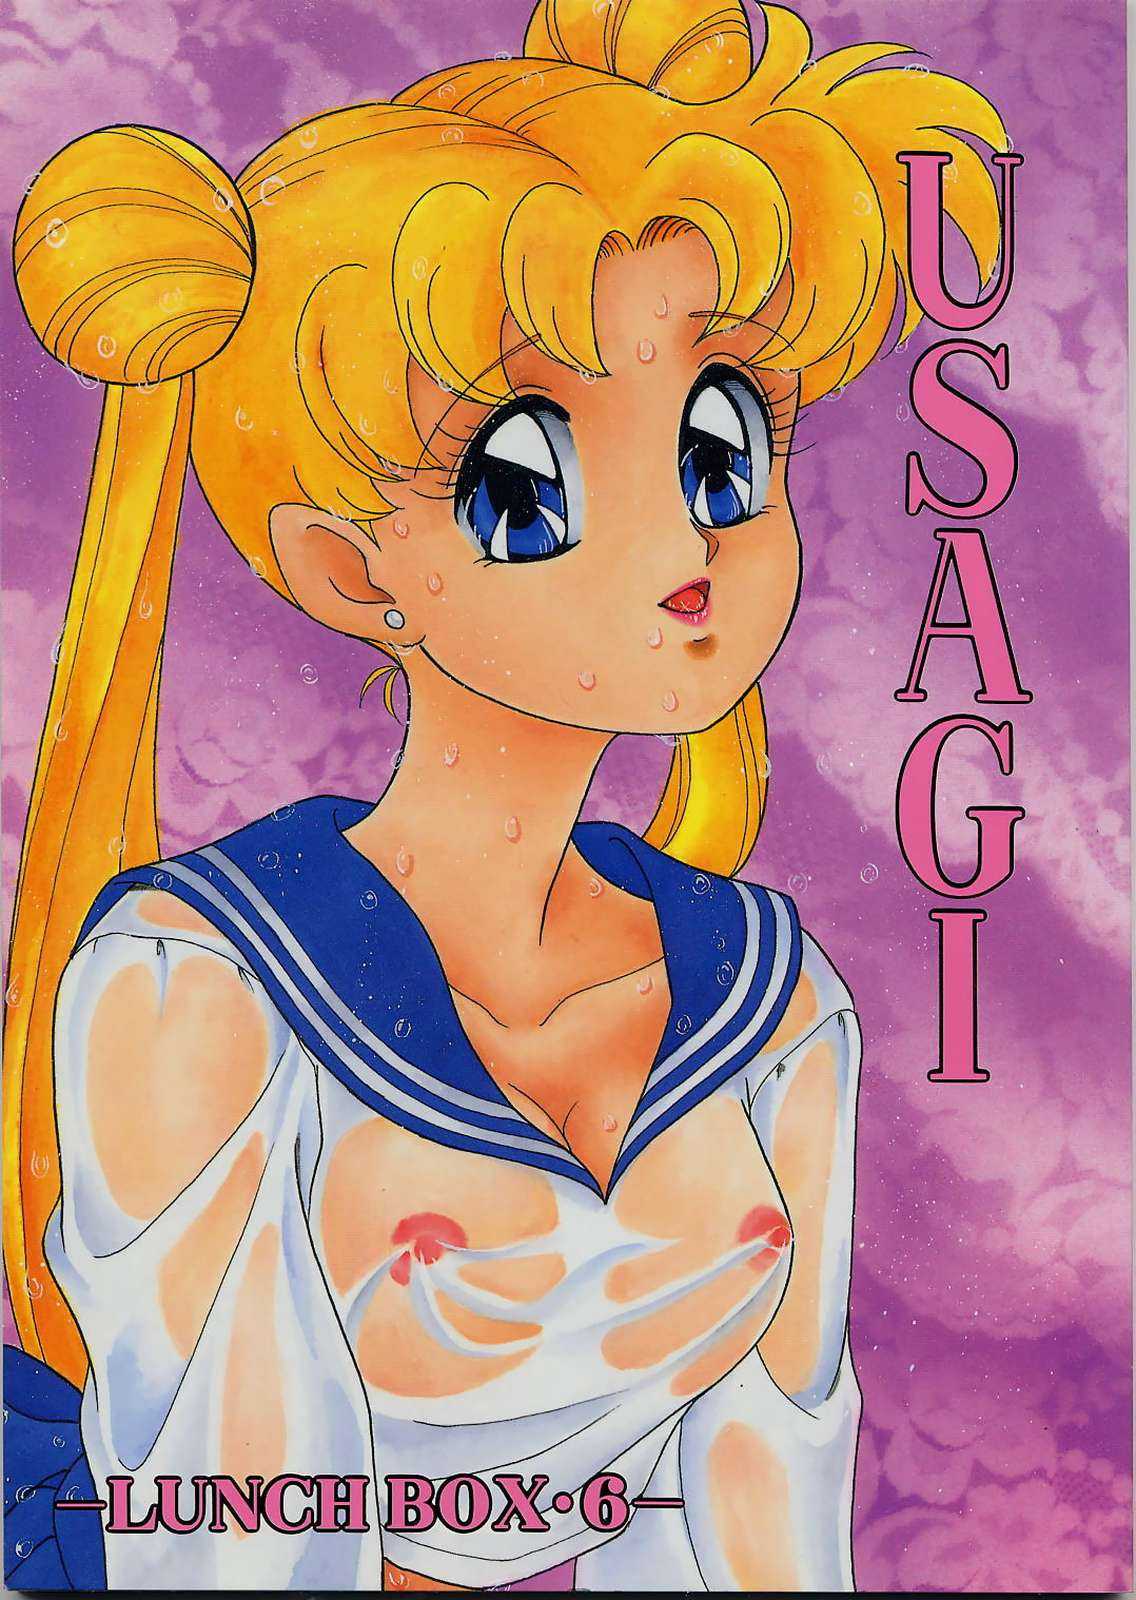 [Lunch Box] 6-Usagi (Sailor Moon) 